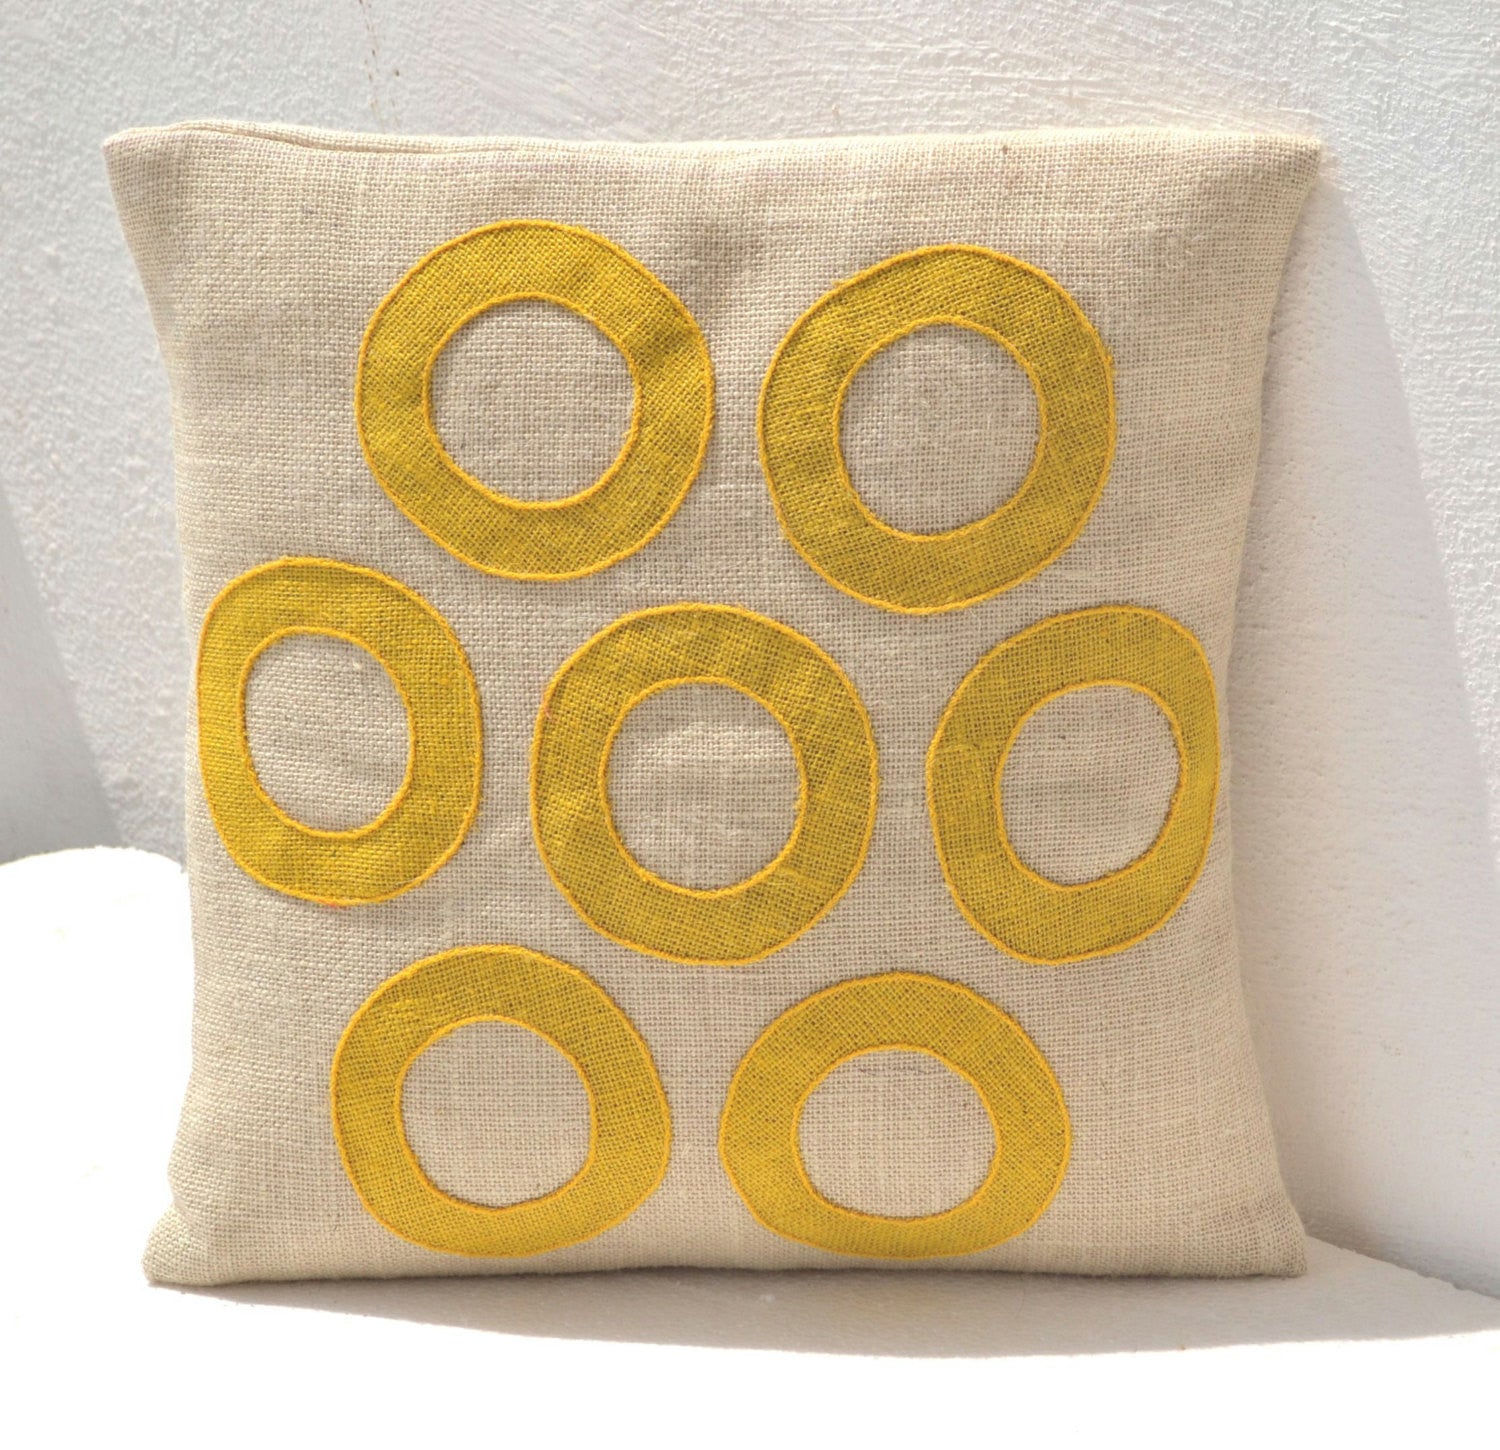 Handmade outdoor yellow geometric throw pillows